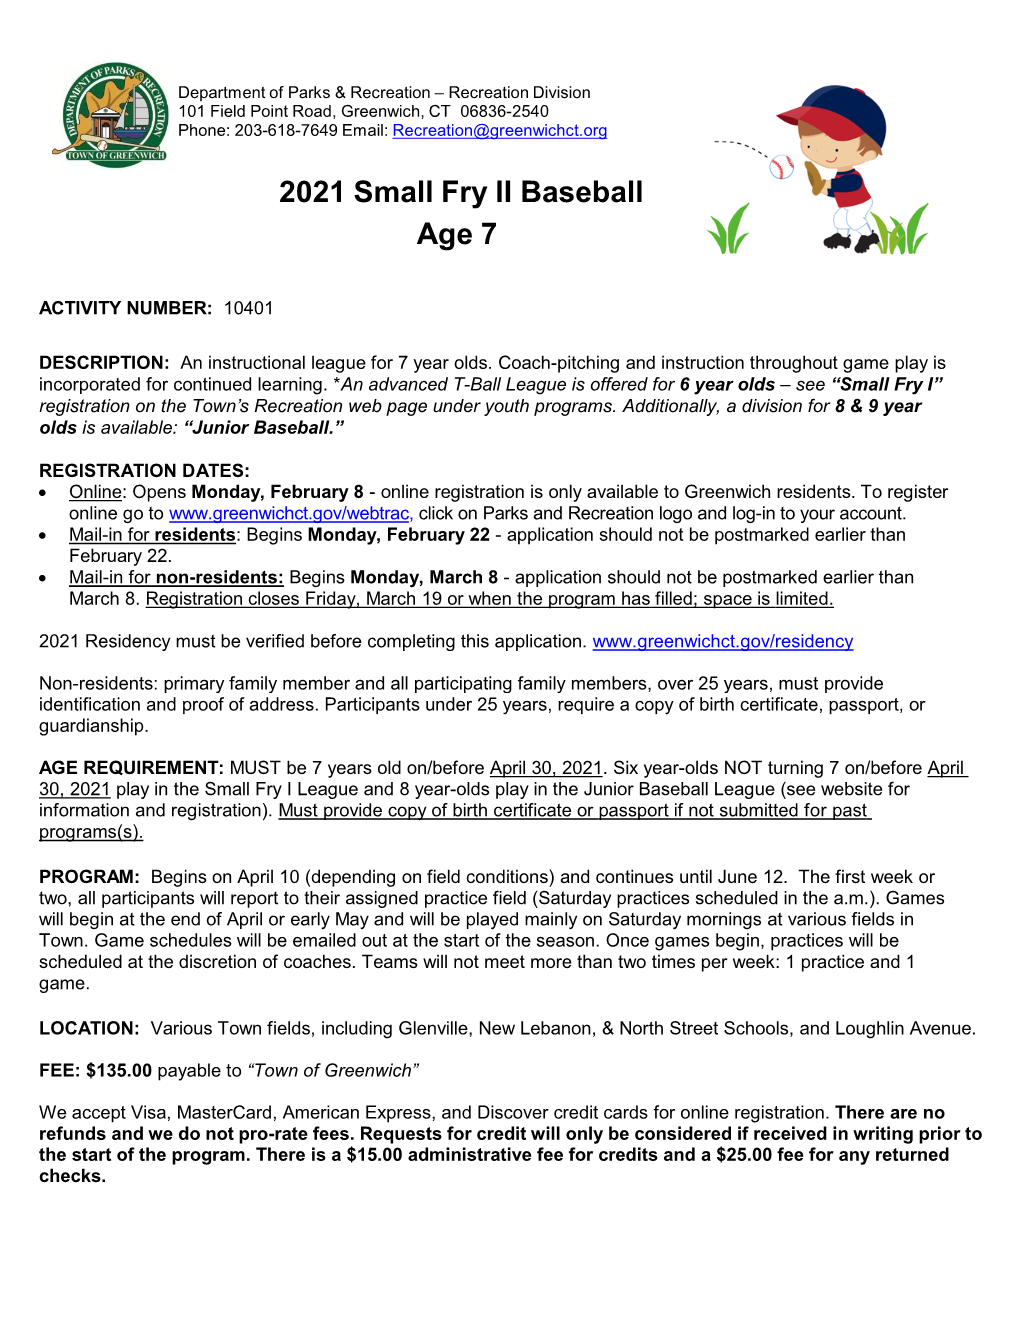 2021 Small Fry II Baseball Age 7